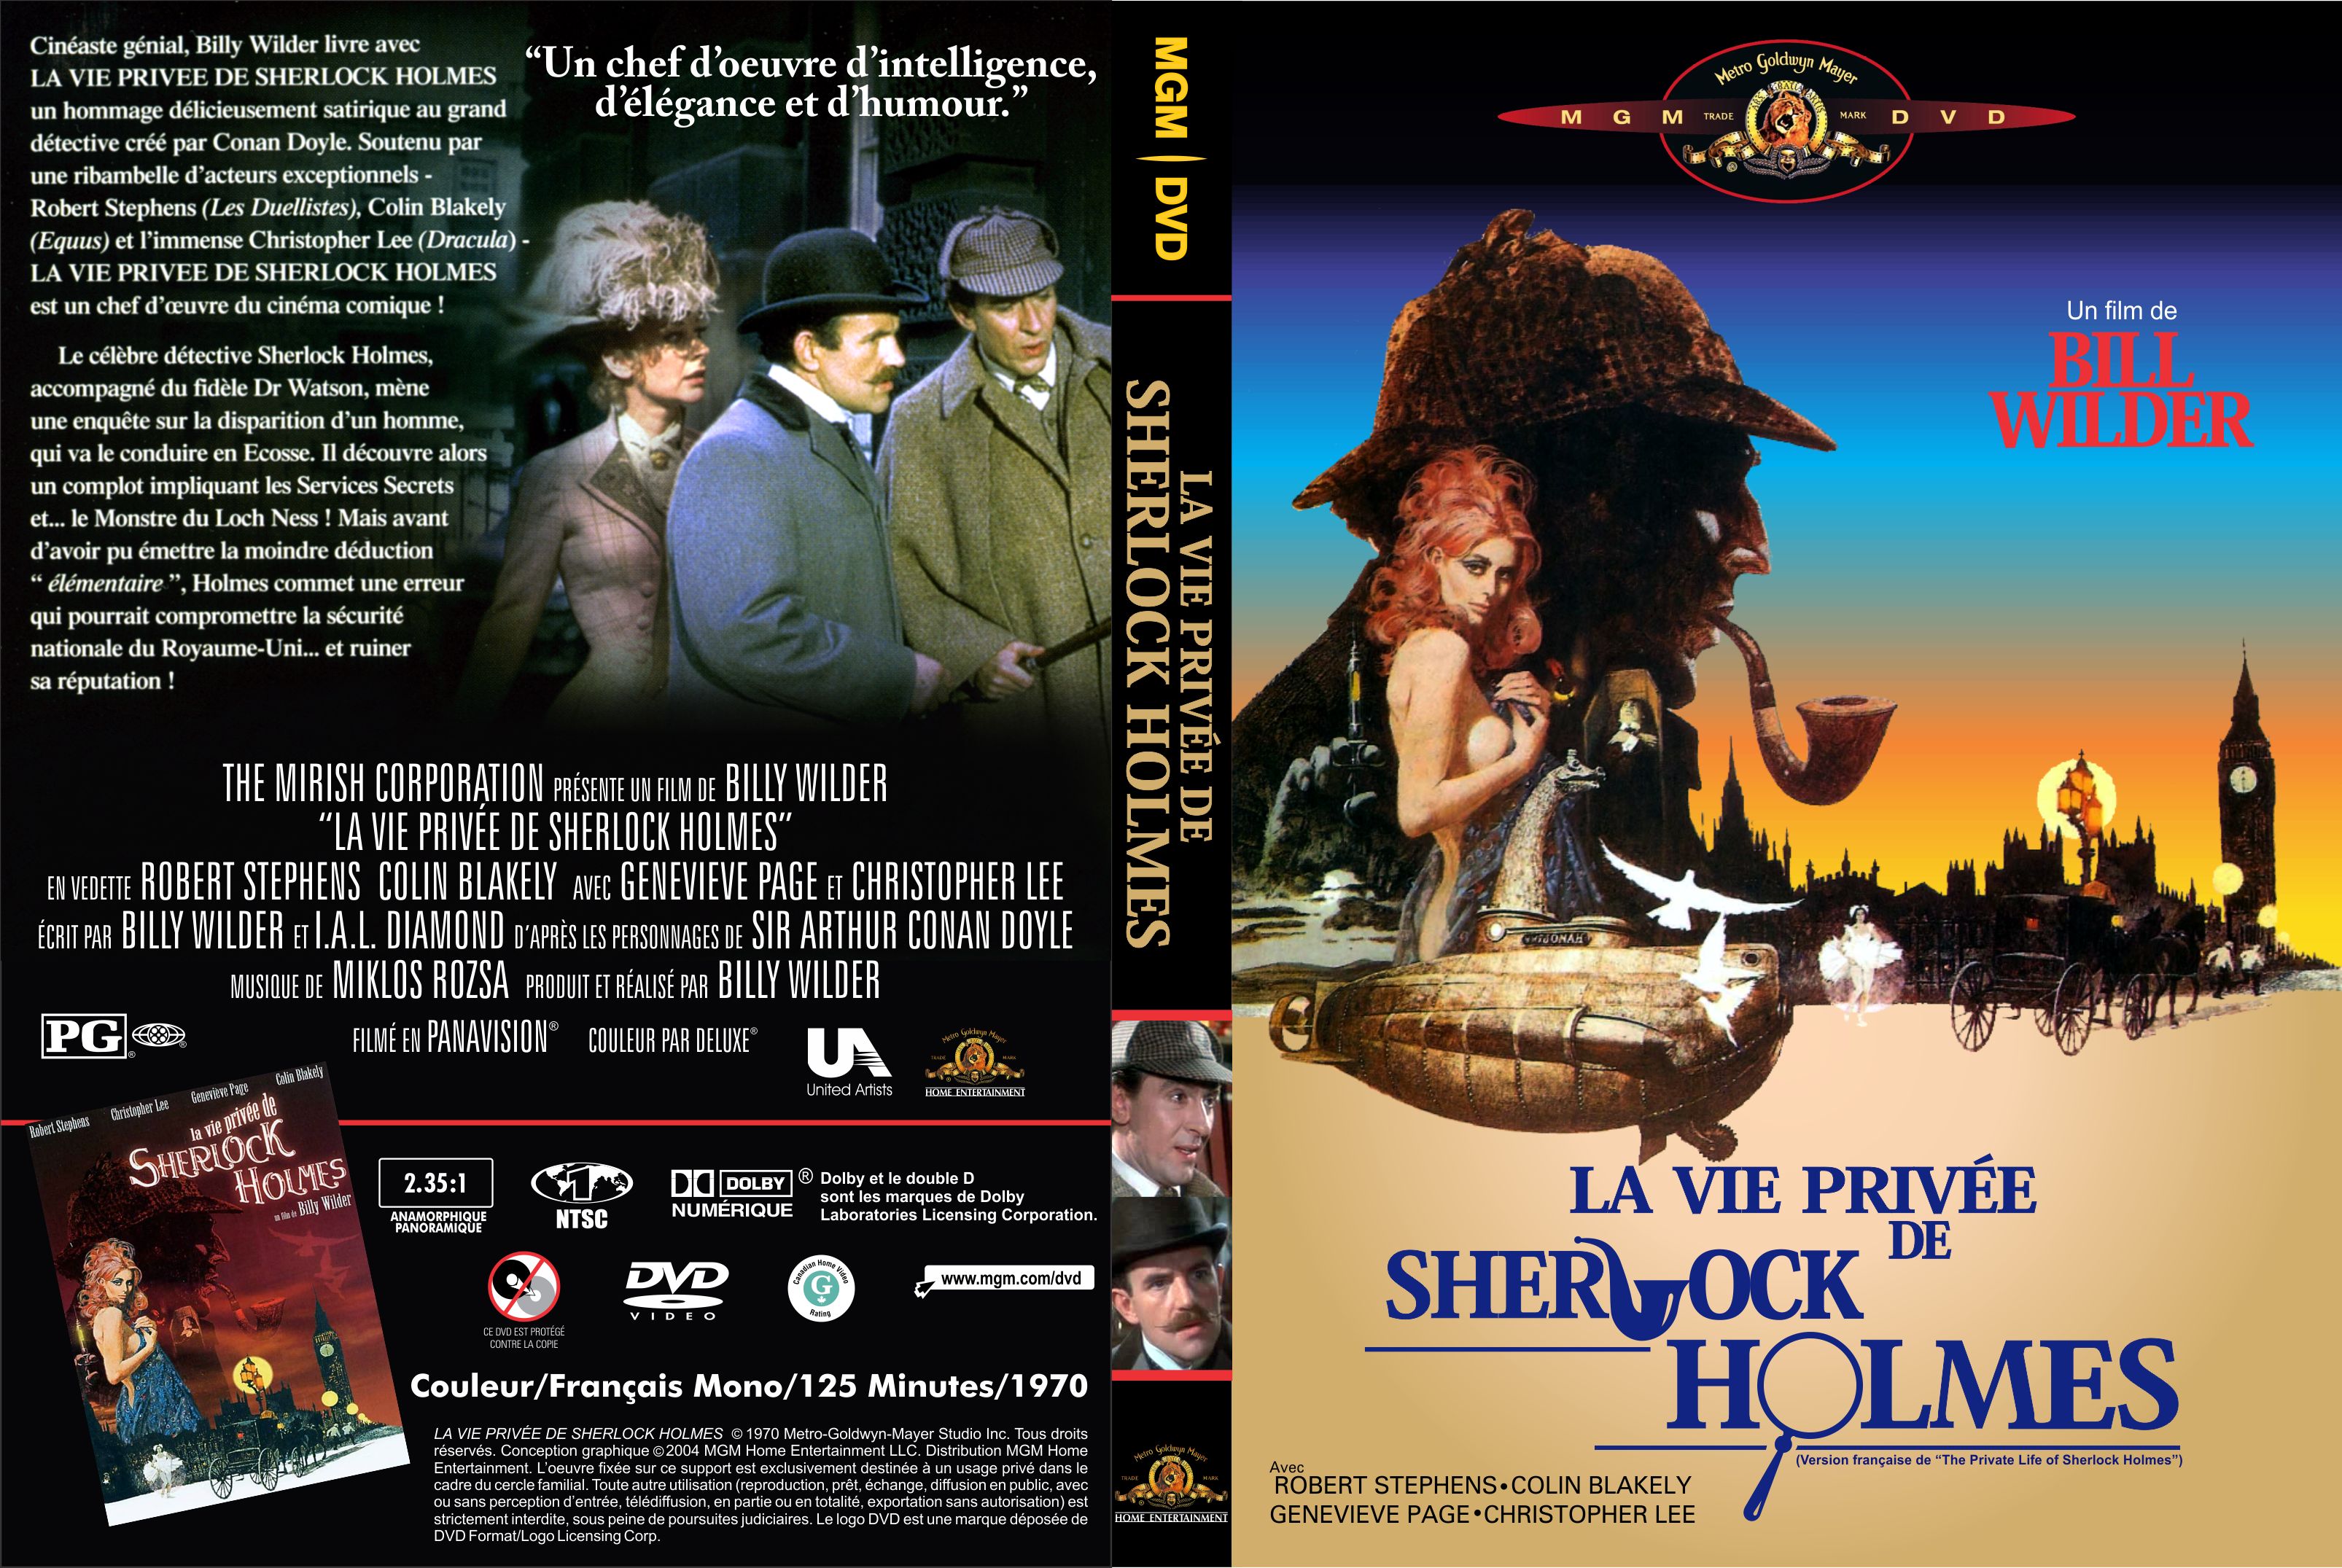 Jaquette DVD La vie prive de Sherlock Holmes custom